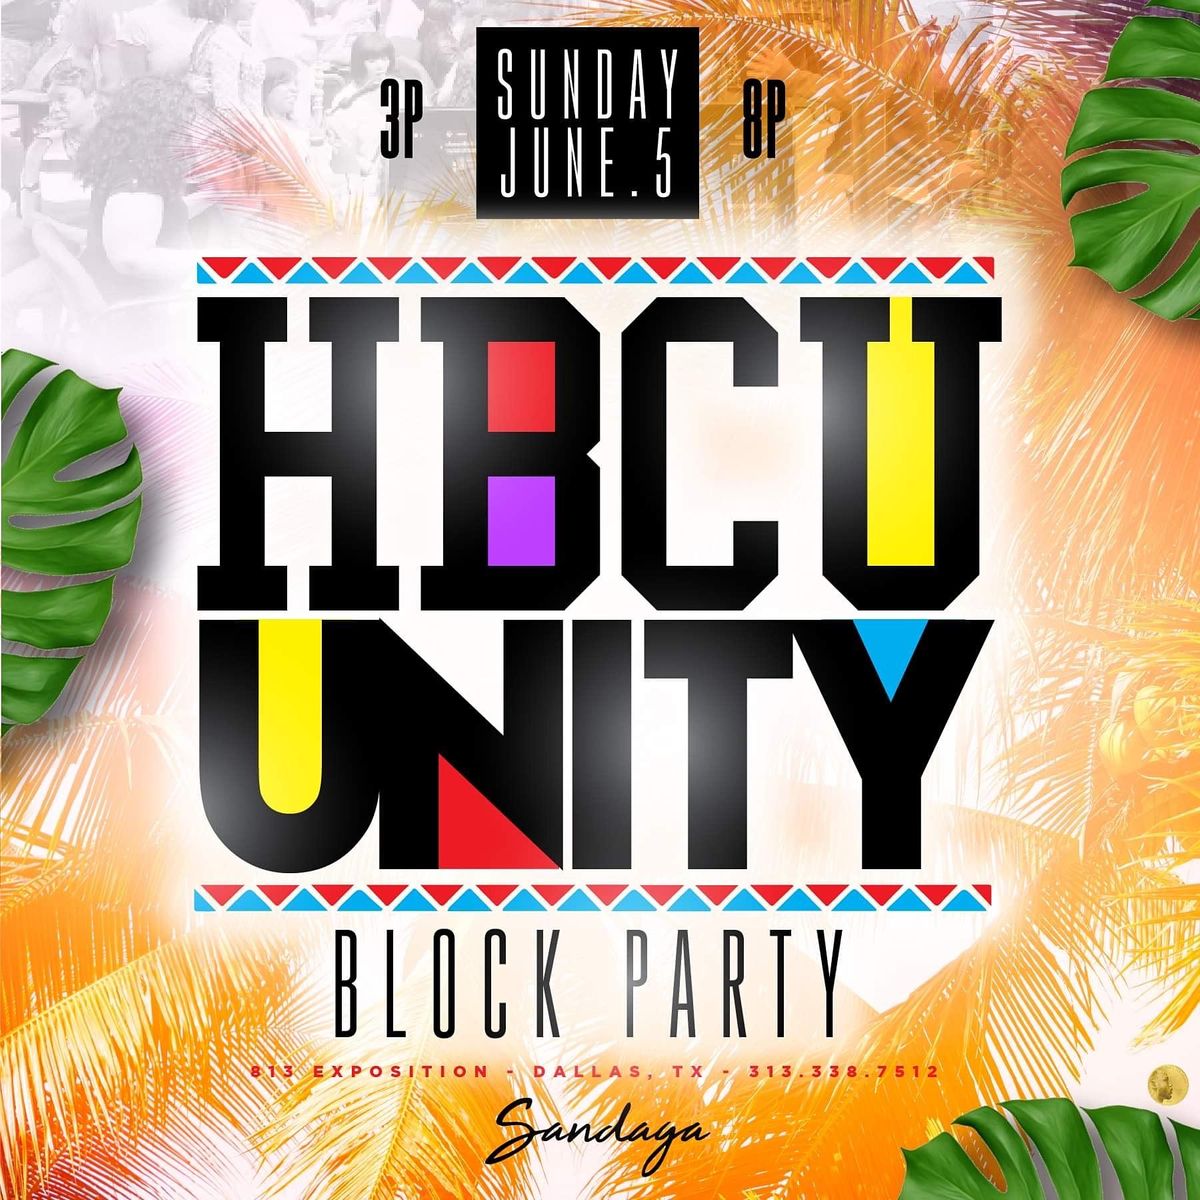 HBCU ALUMNI UNITY BLOCK PARTY